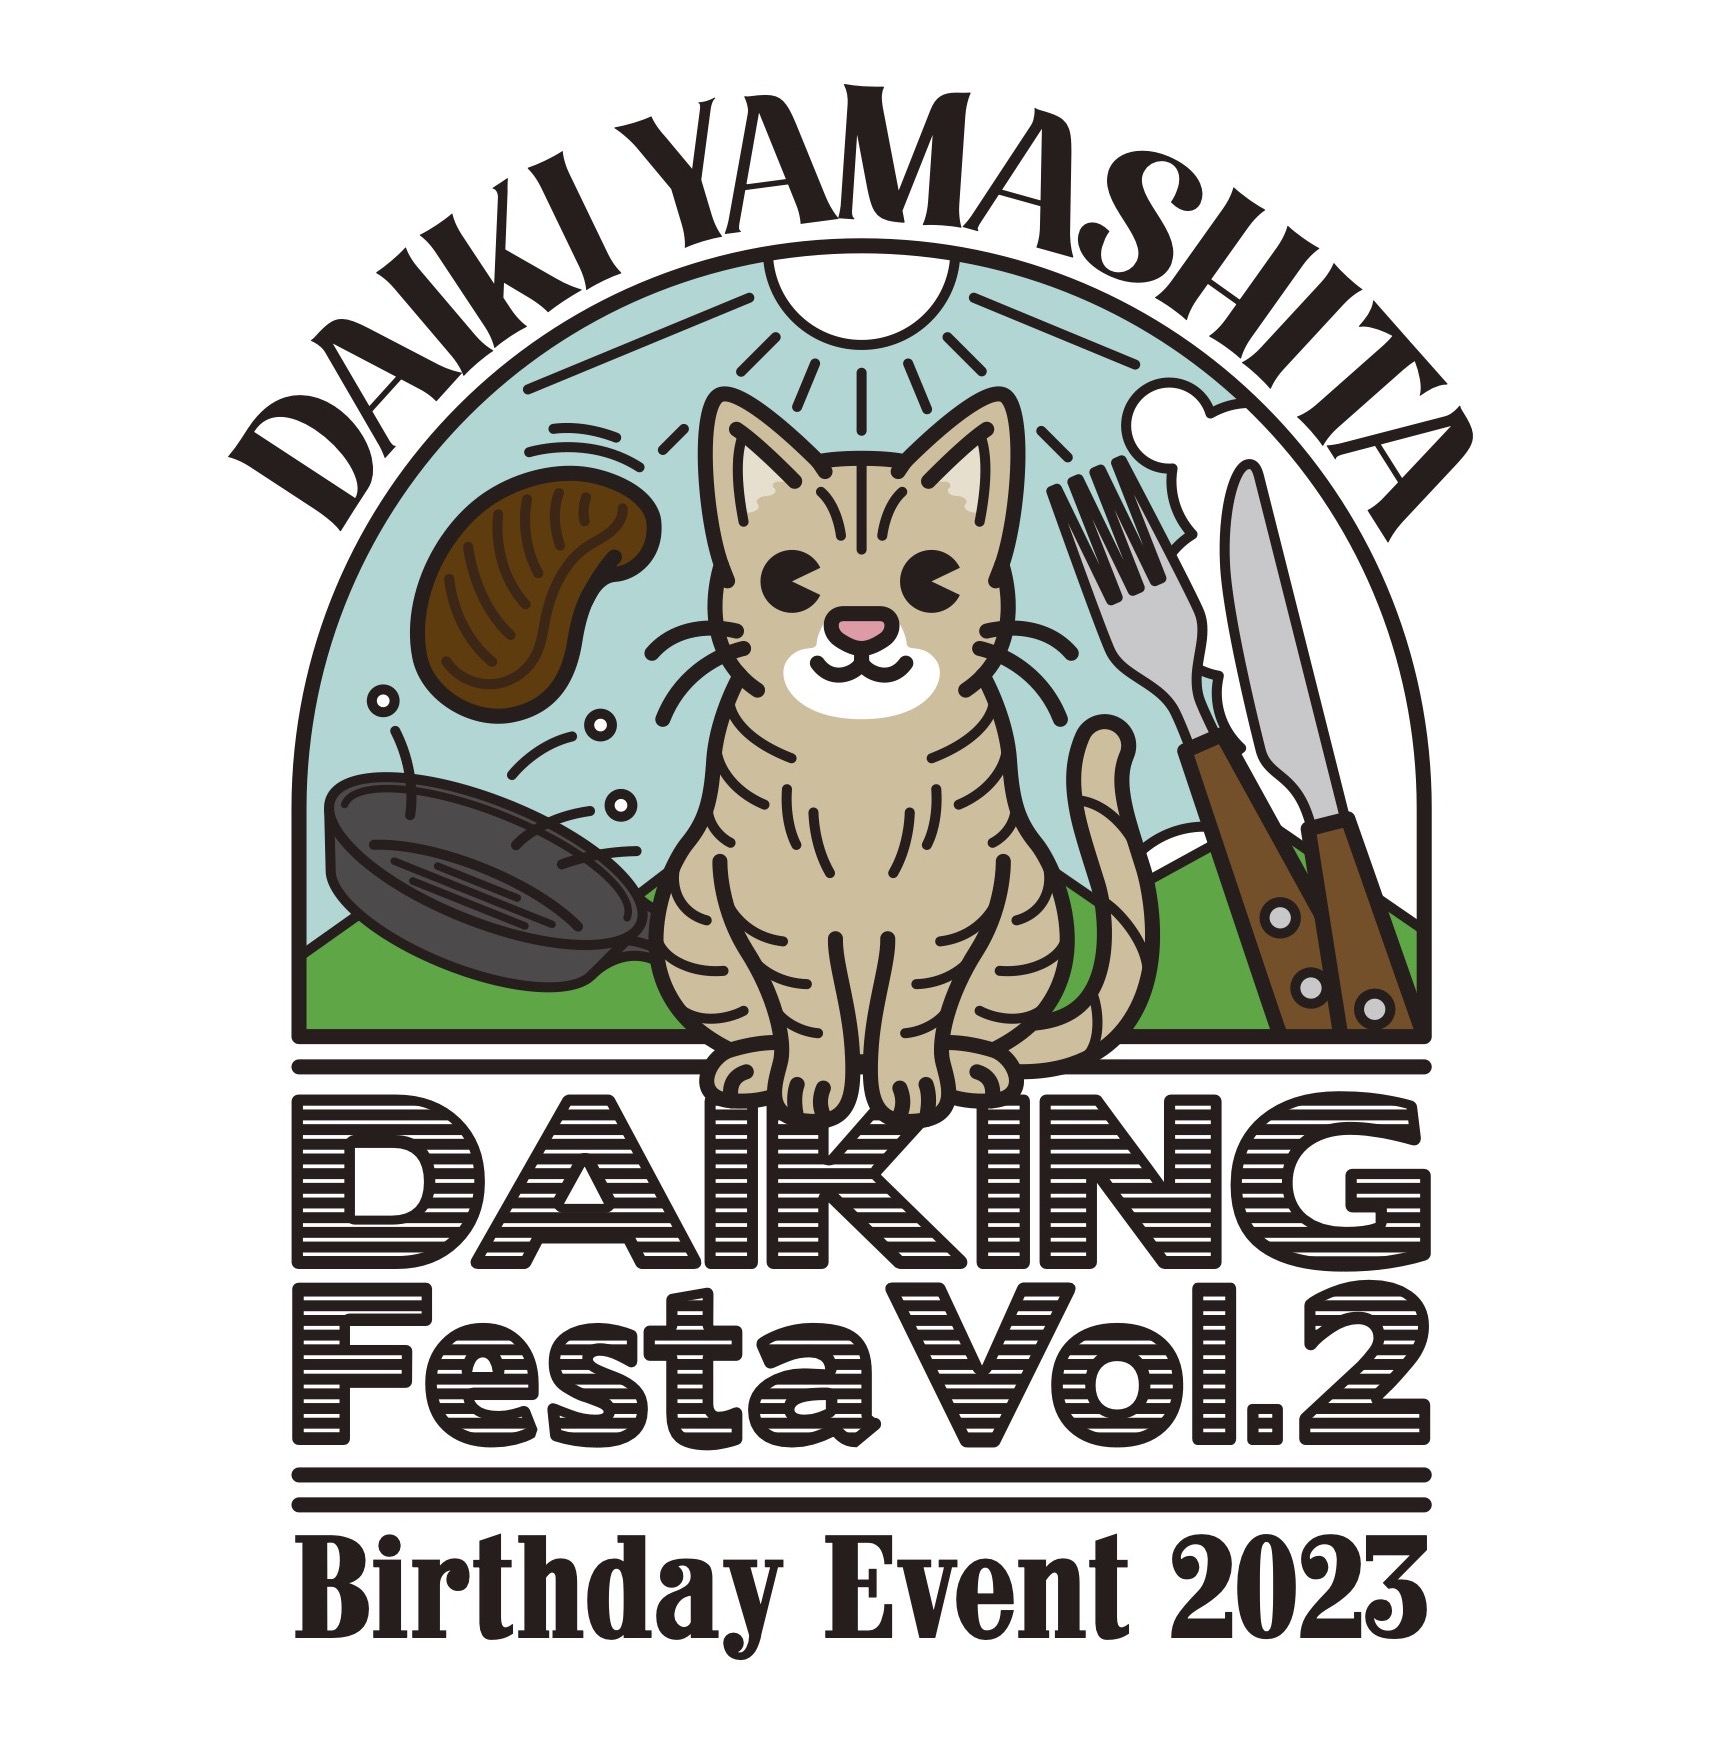 Daiki Yamashita Birthday Event 2023 DAIKING Festa Vol.2 @ 豊洲PIT